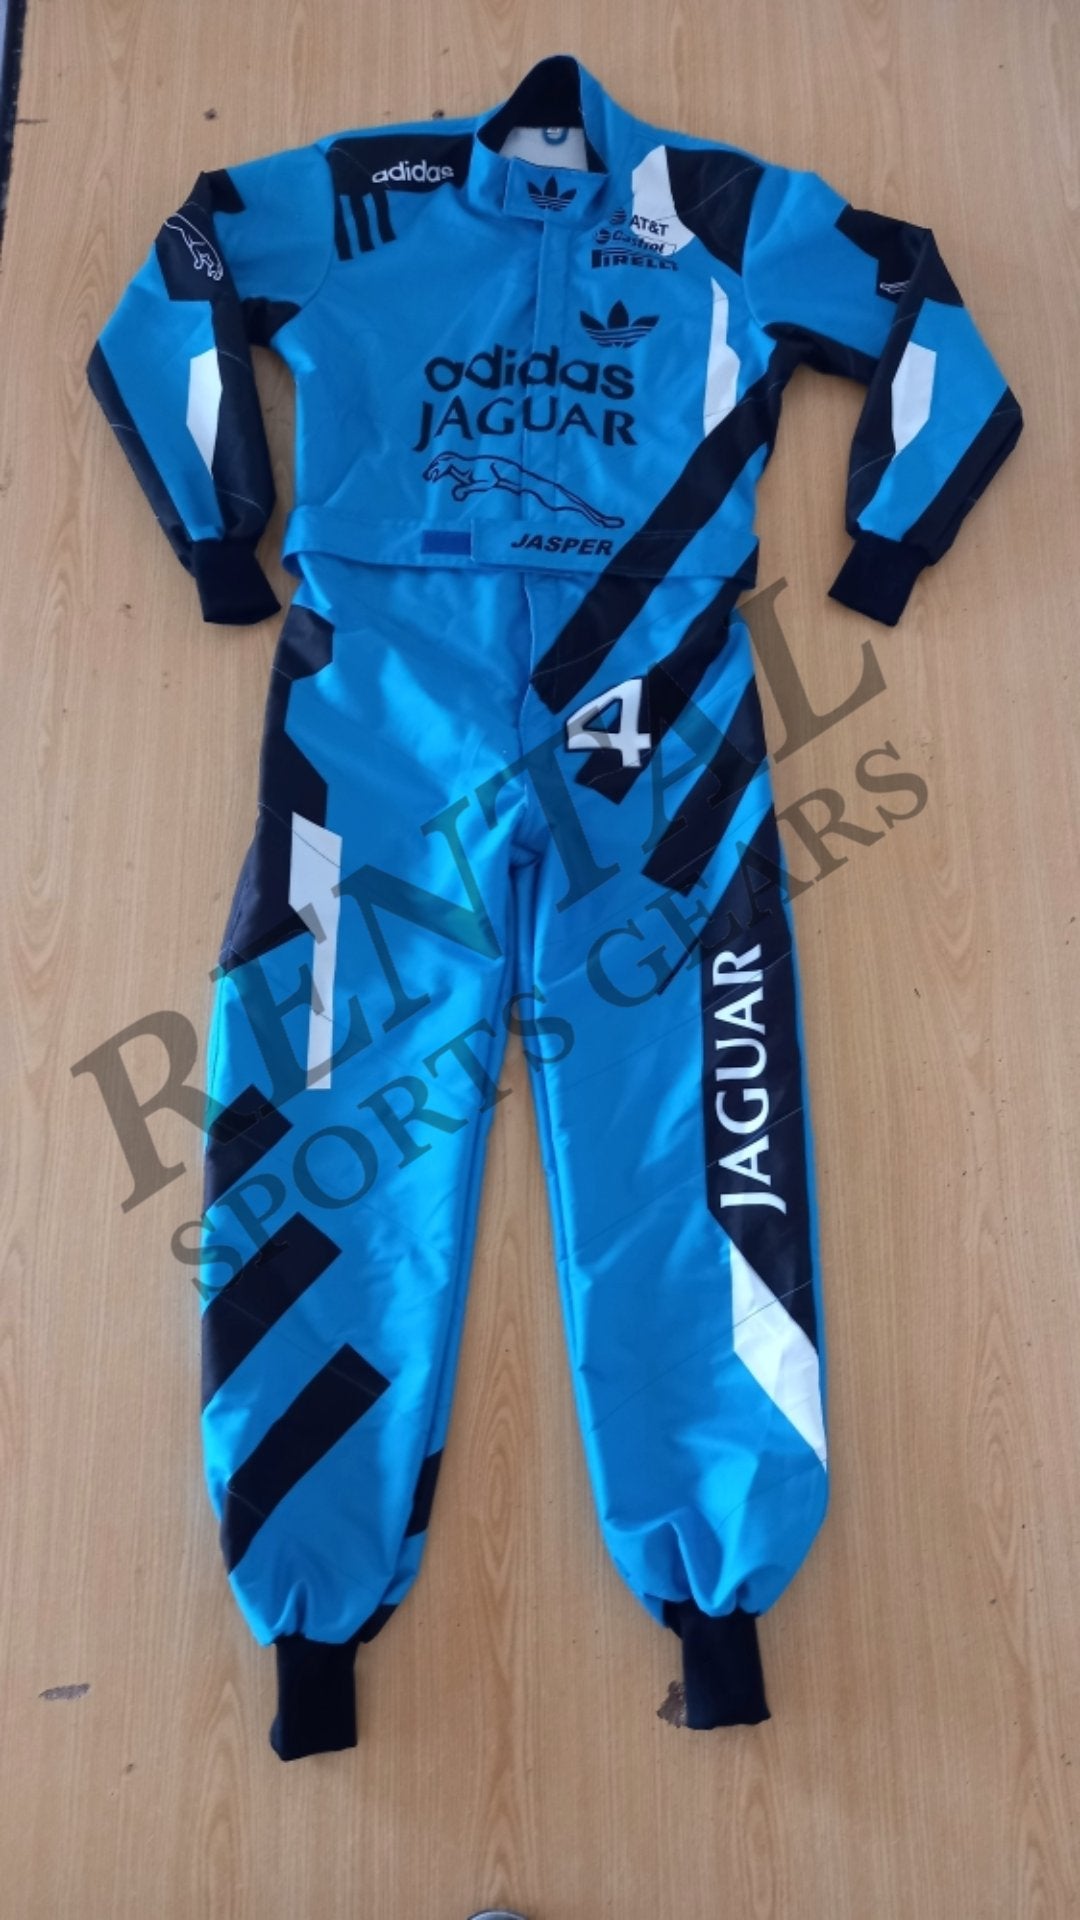 Adidas Jaugar Kart suit / Formula 1 Race Suit